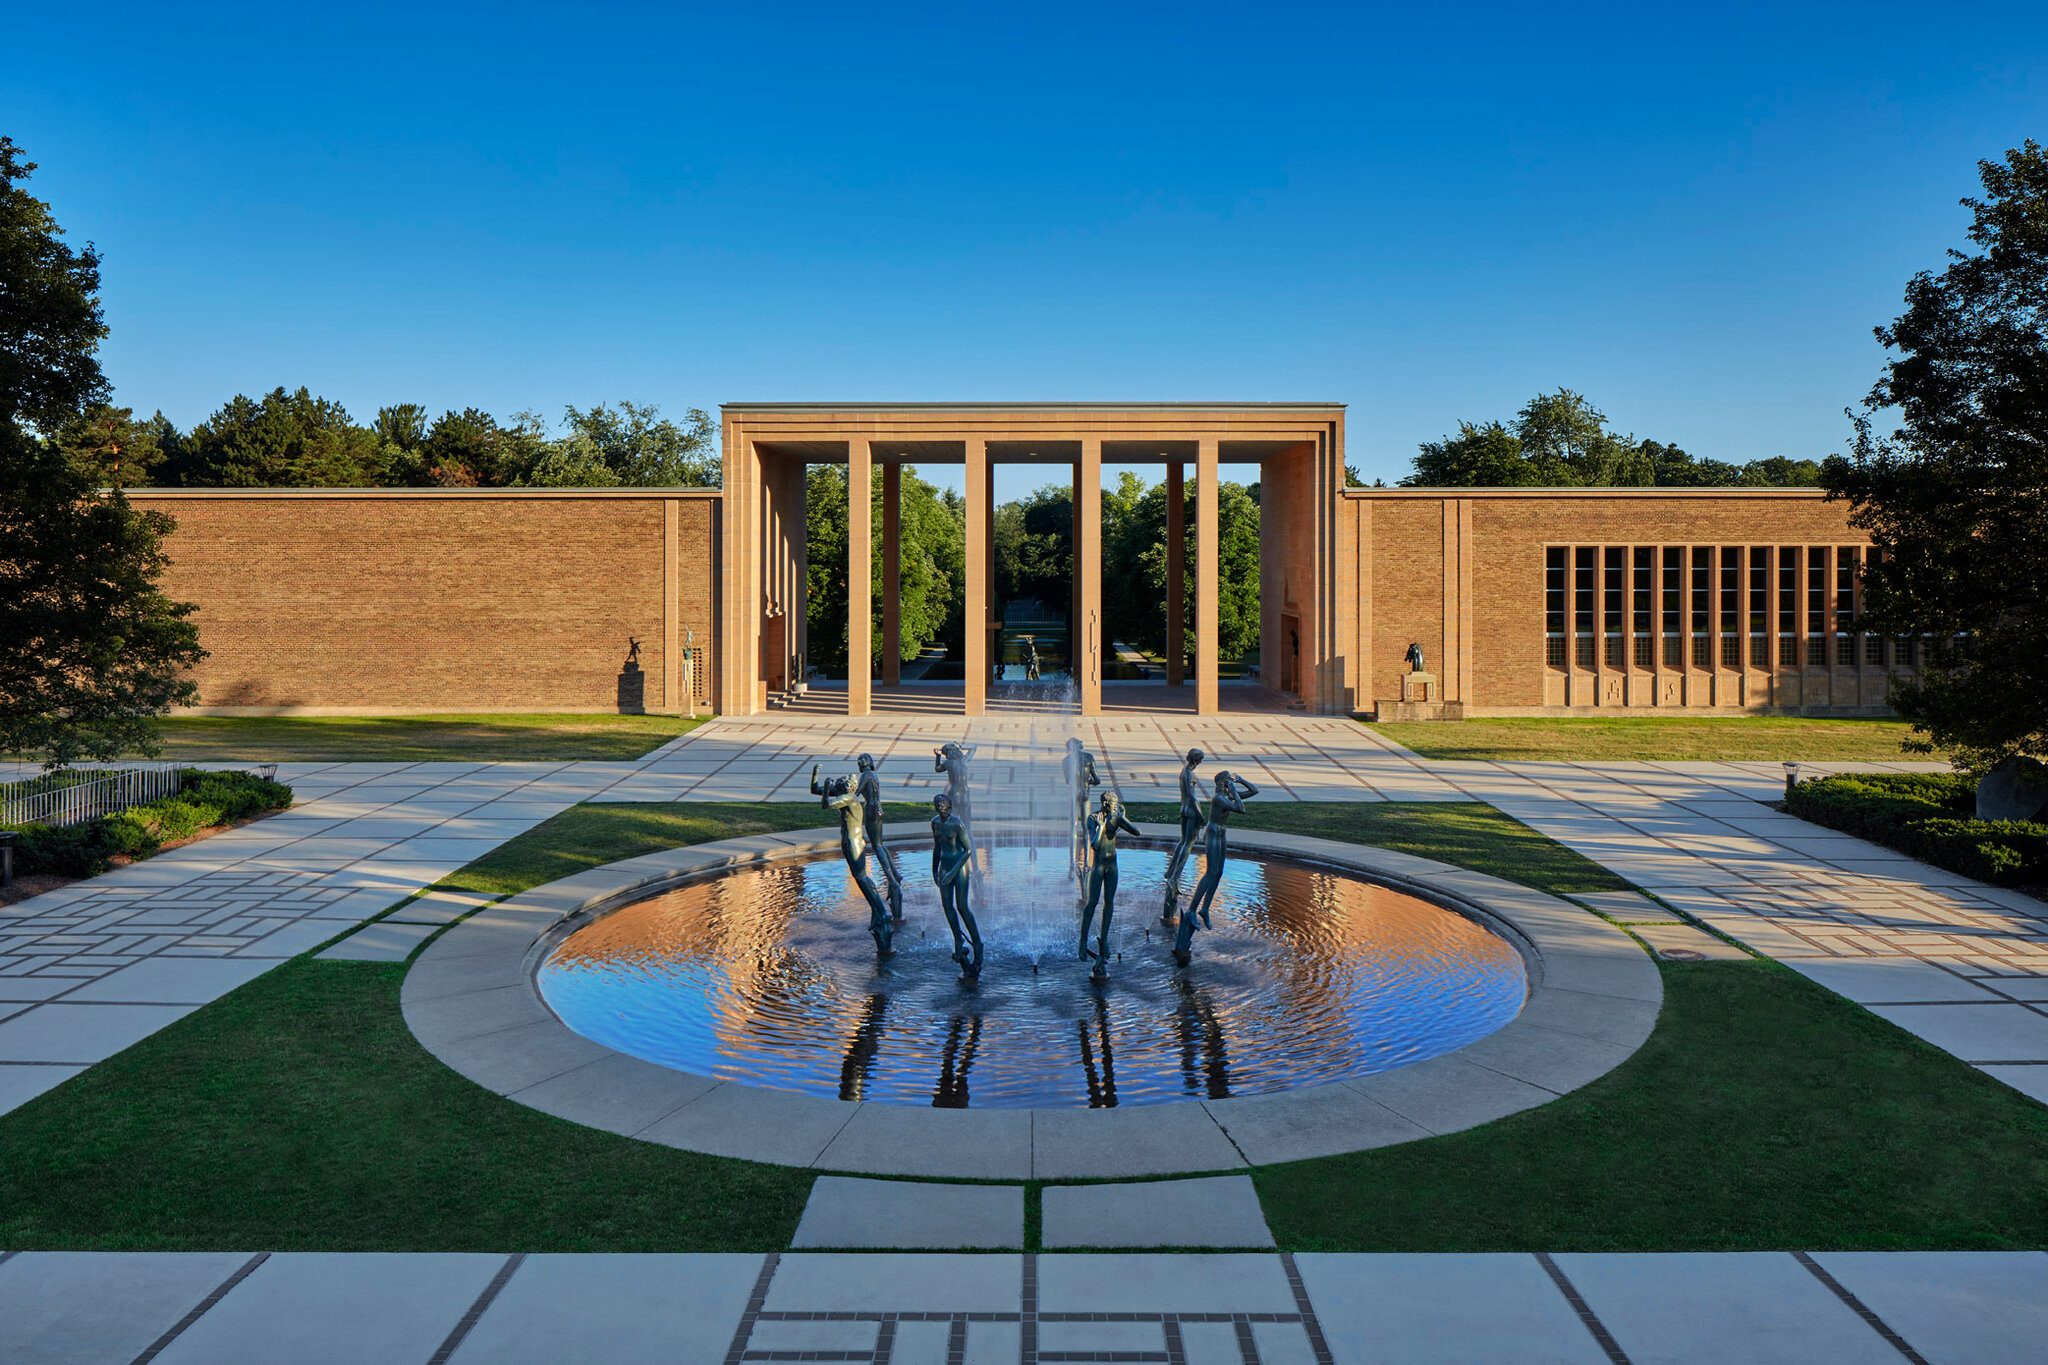 Orpheus Fountain, Cranbrook Academy of Art, Bloomfield Hills, Michigan. Fountain with bronze sculptured figures